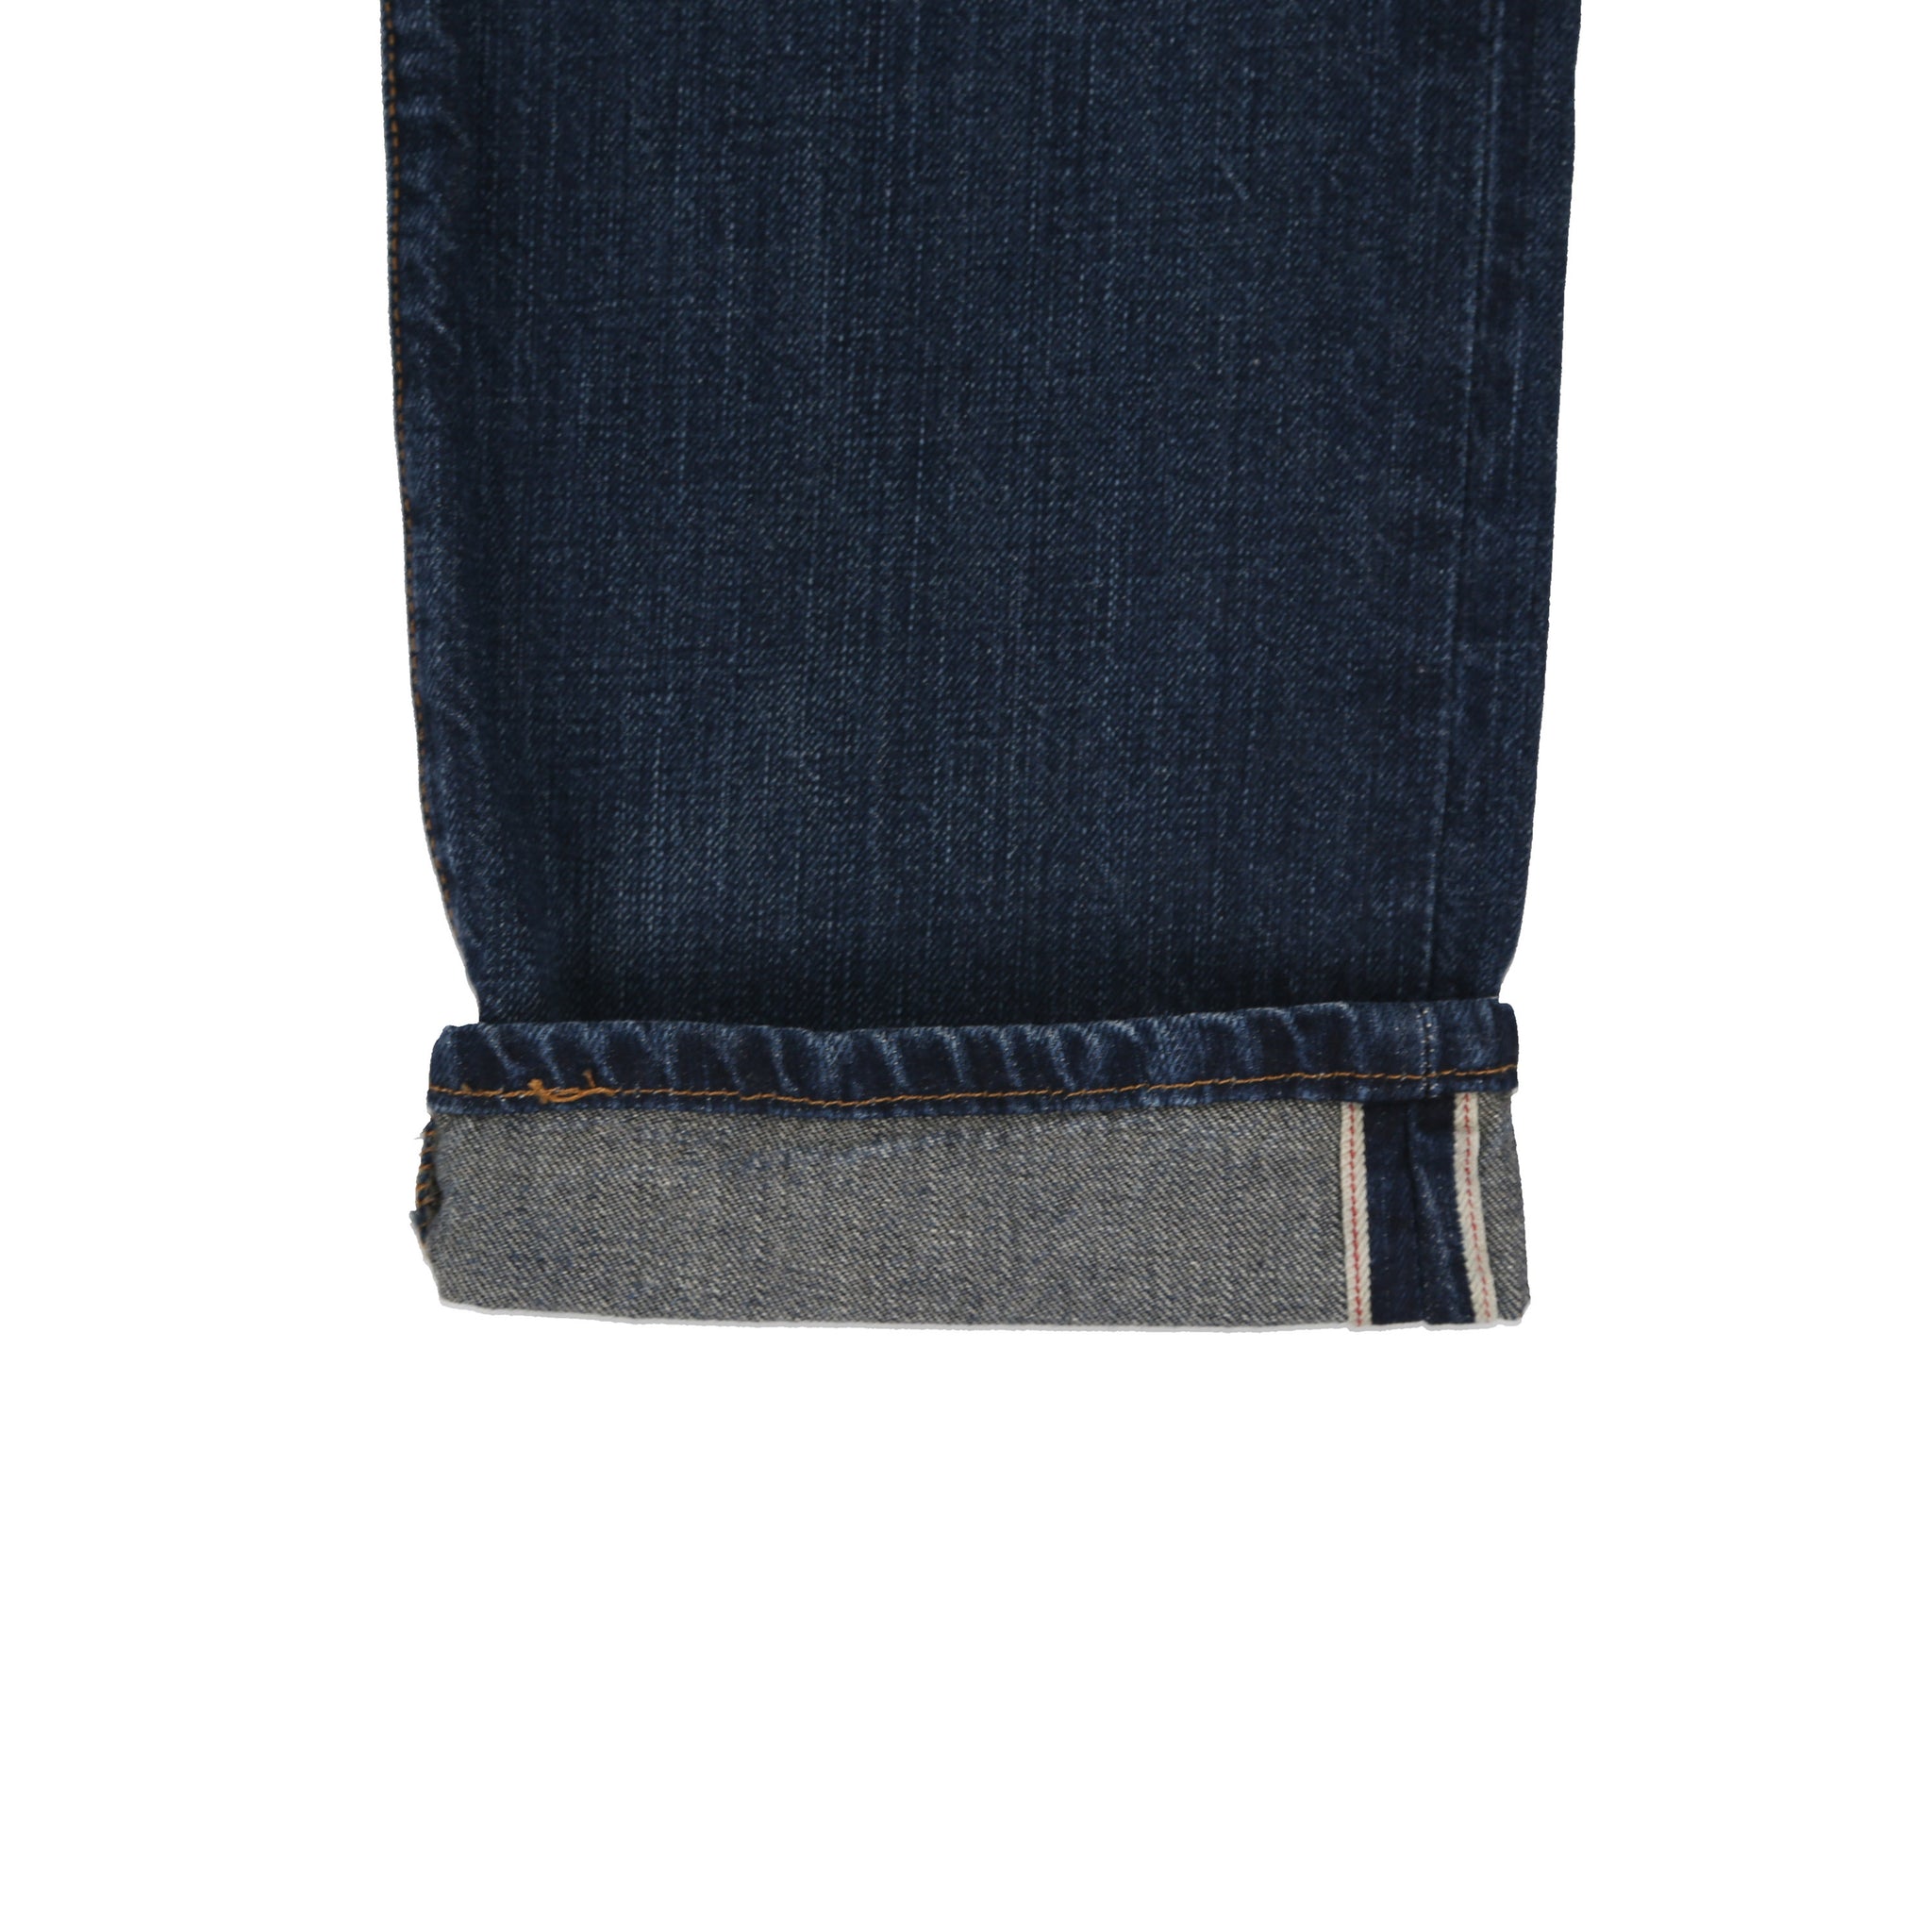 New Levis 501 Selvedge Denim Jeans